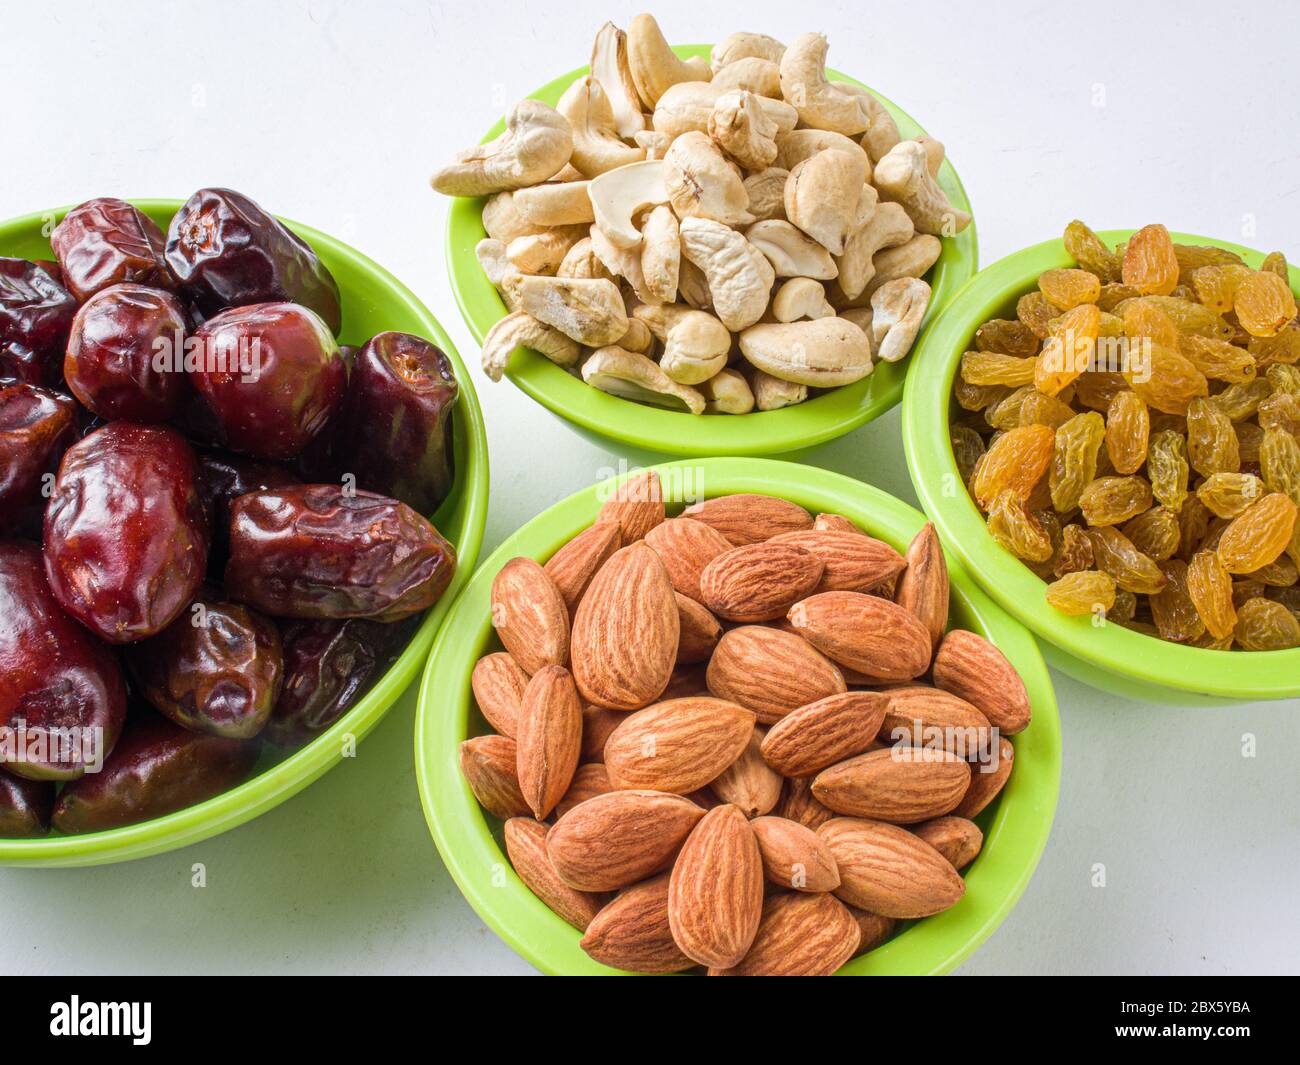 khajur, raisin/kismis, kaju badam/ cashew and almonds all at a single frame stock image white background. Stock Photo